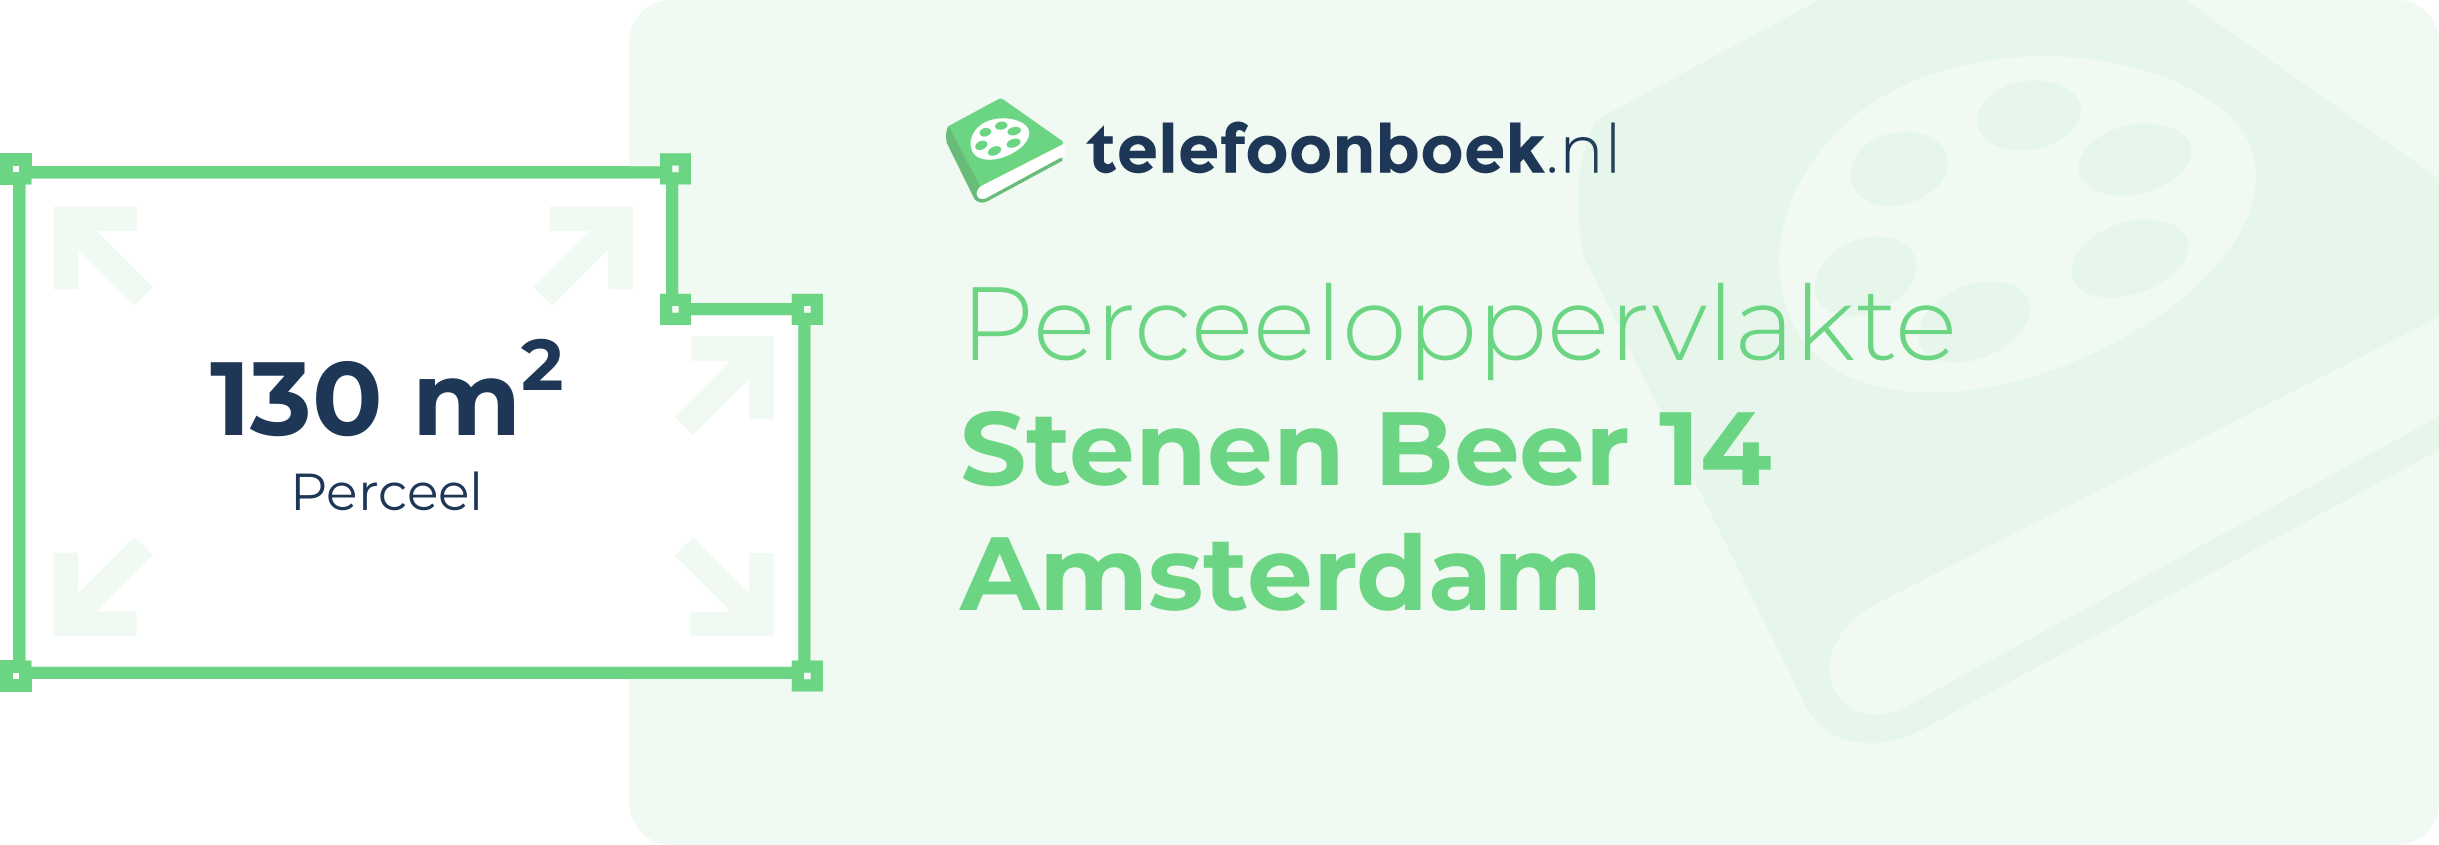 Perceeloppervlakte Stenen Beer 14 Amsterdam